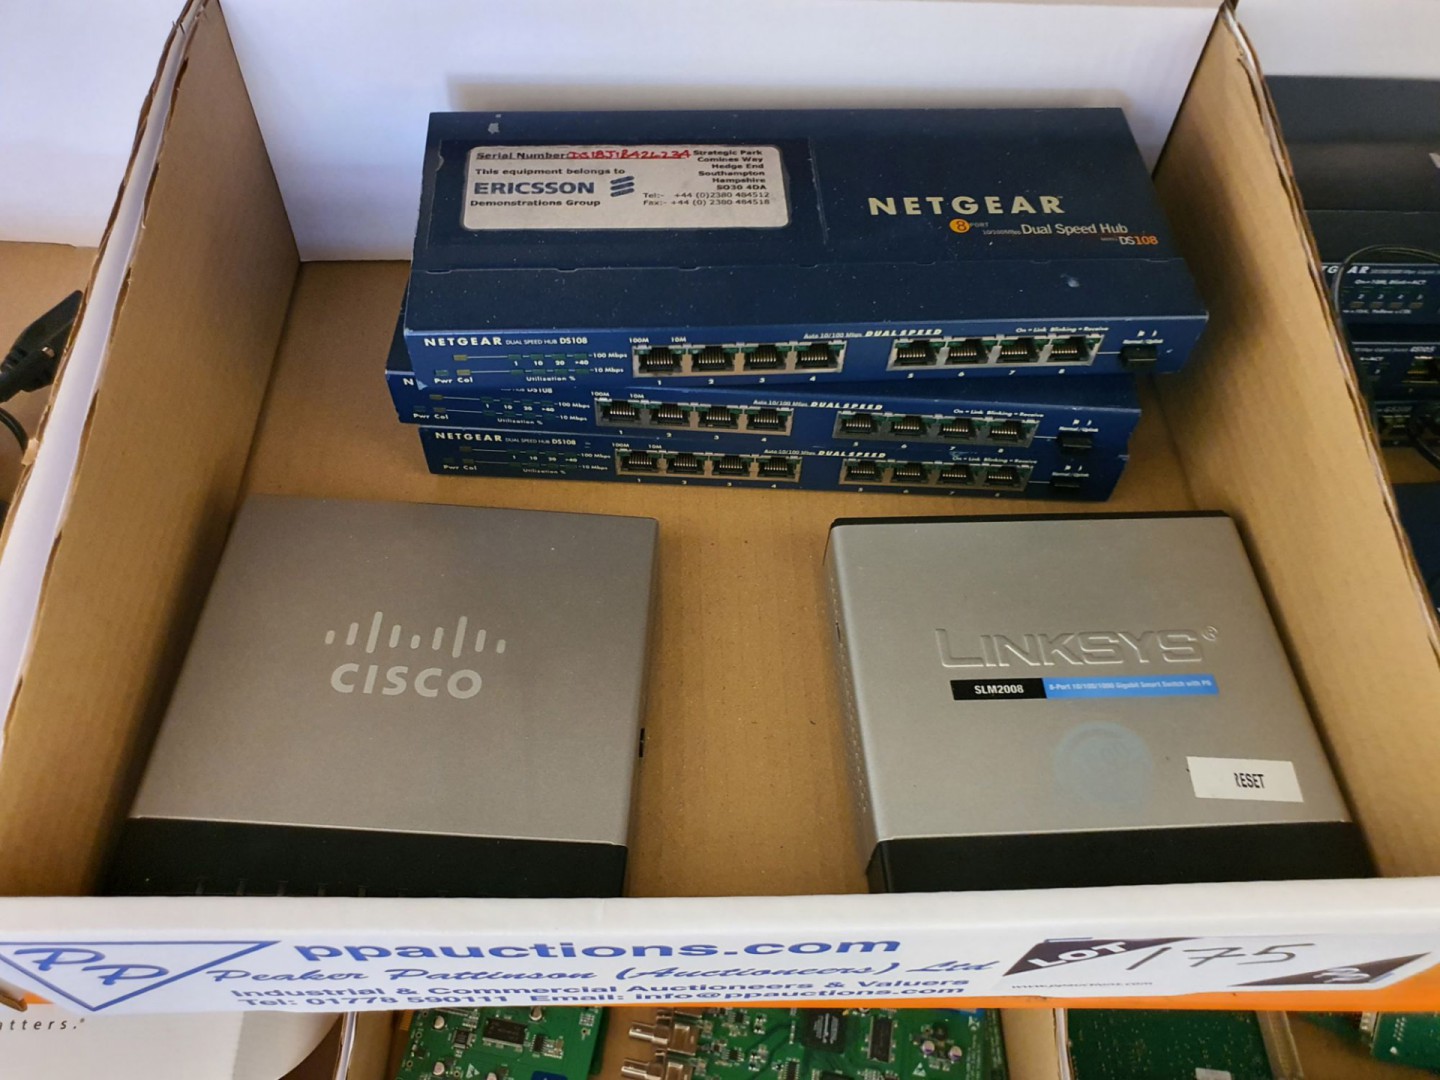 3x Netgear DS108 dual speed hub, Cisco SG200-08 Gi...